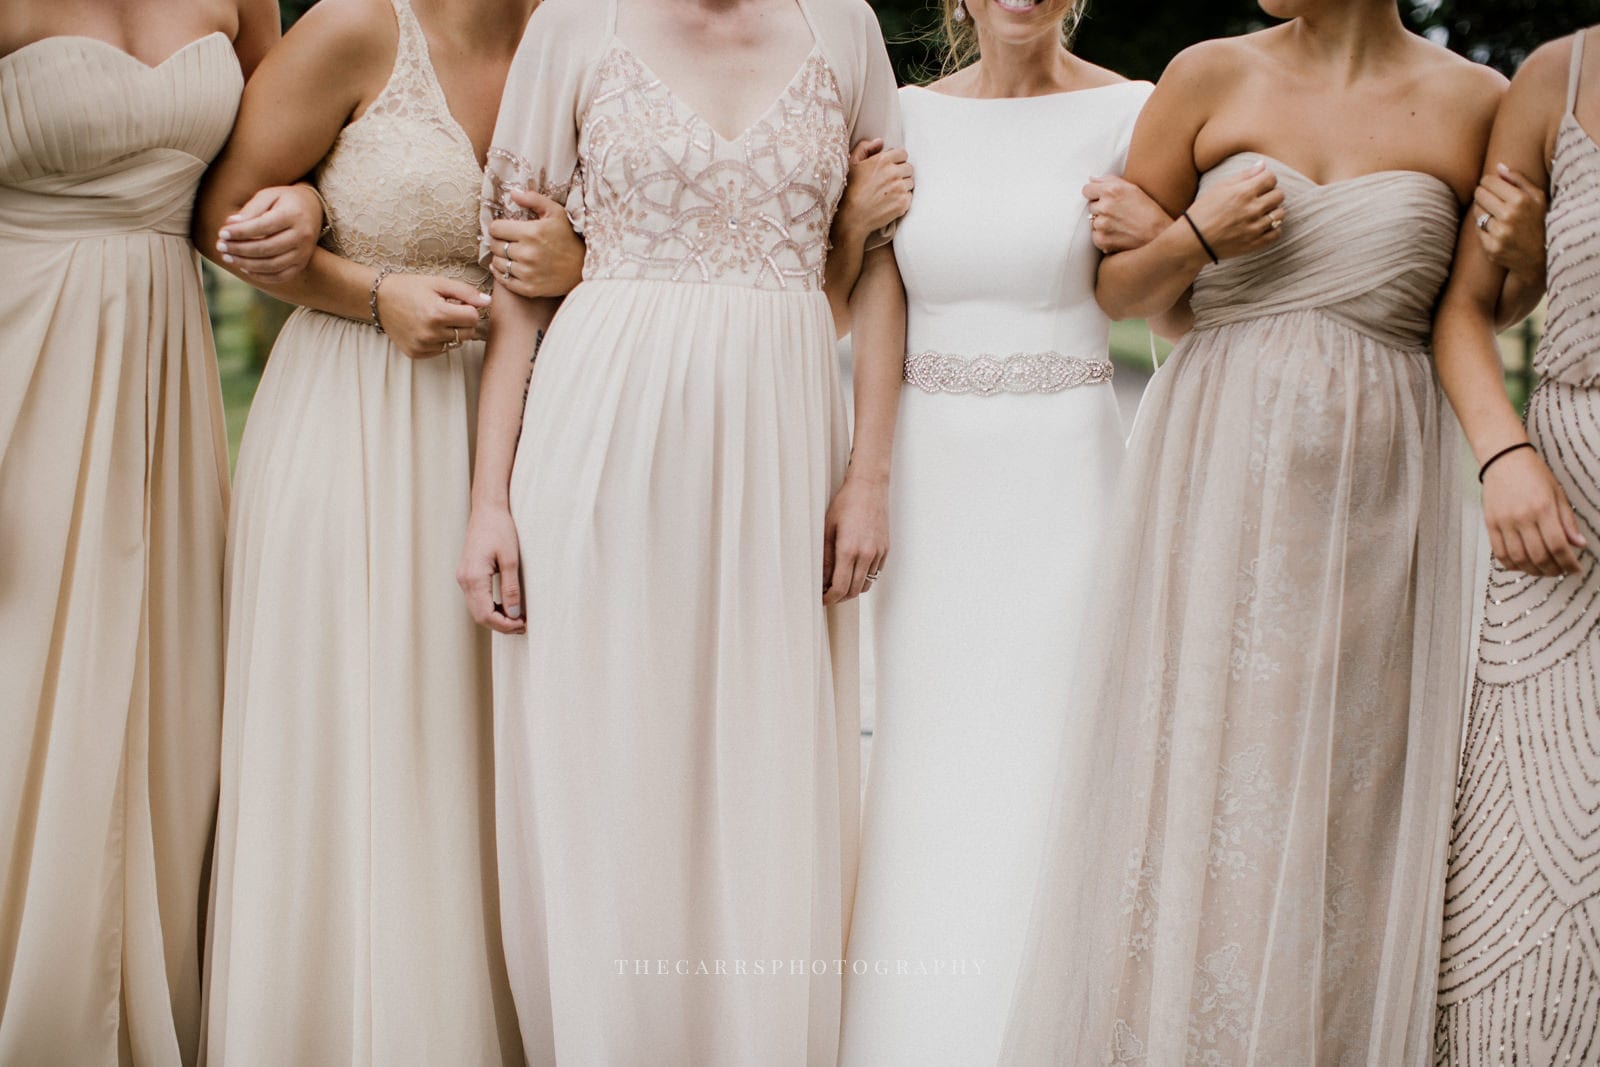 bride and bridesmaids dress details at lake house wedding - Akron Ohio Wedding Photographer